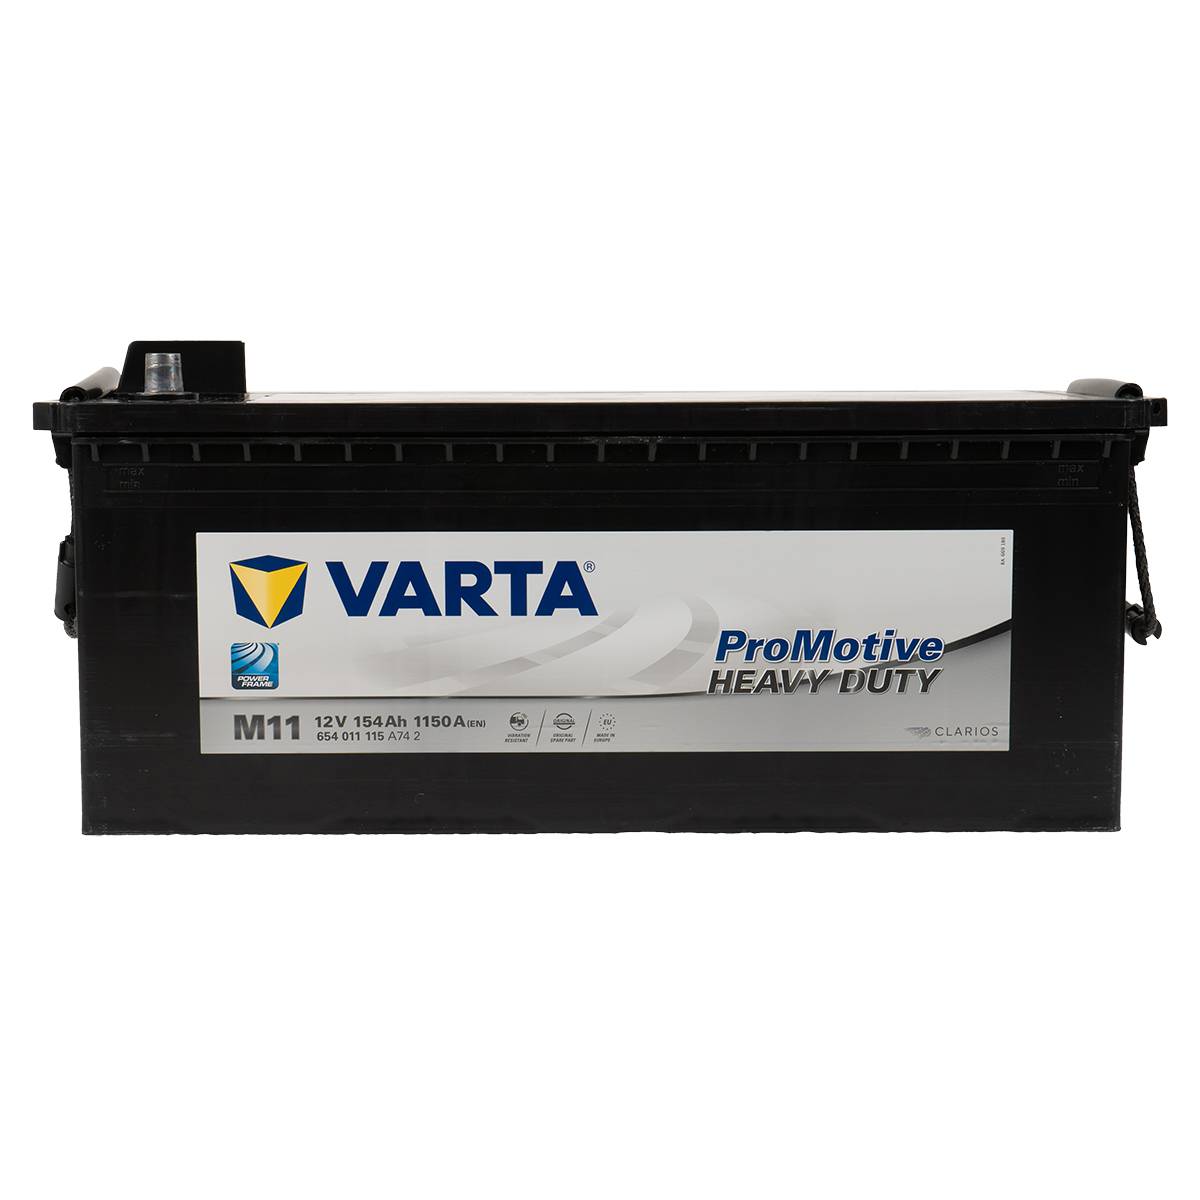 VARTA M11 ProMotive Heavy Duty 12V 154Ah 1150A LKW Batterie 654 011 115